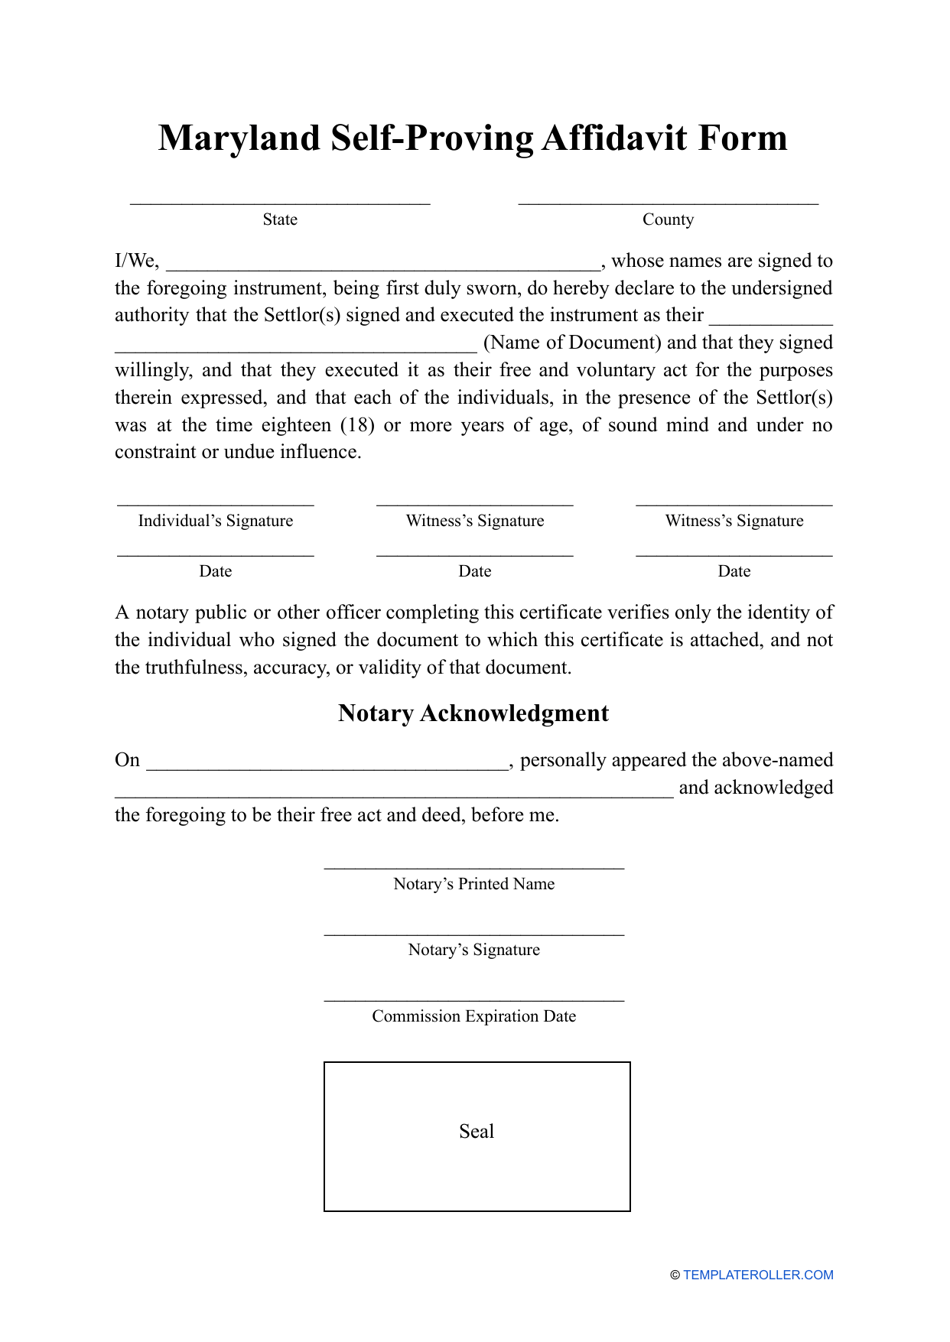 Self-proving Affidavit Form - Maryland, Page 1